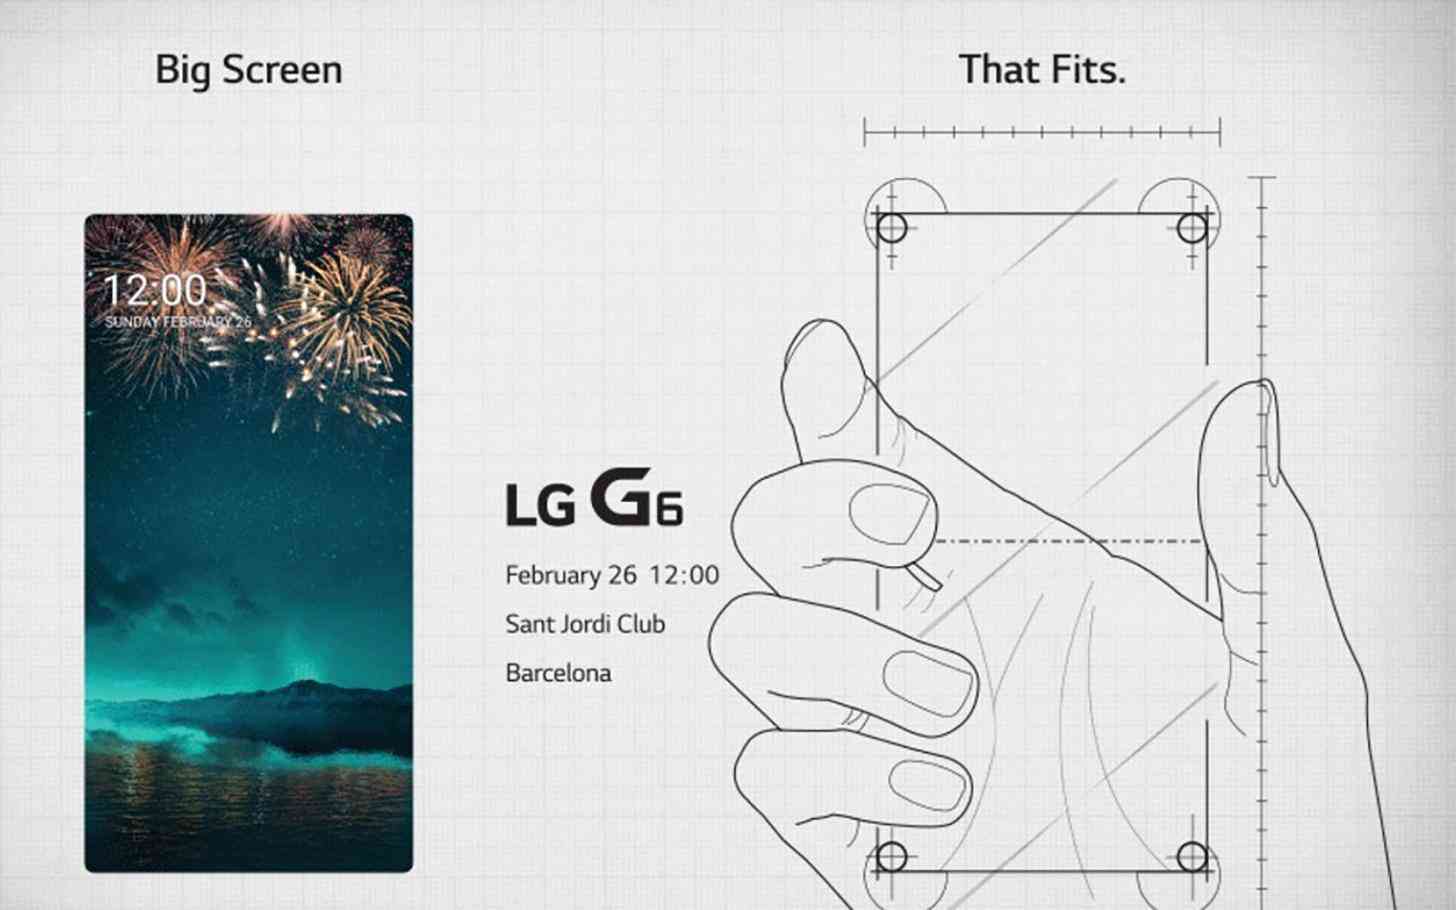 LG G6 announcement invitation